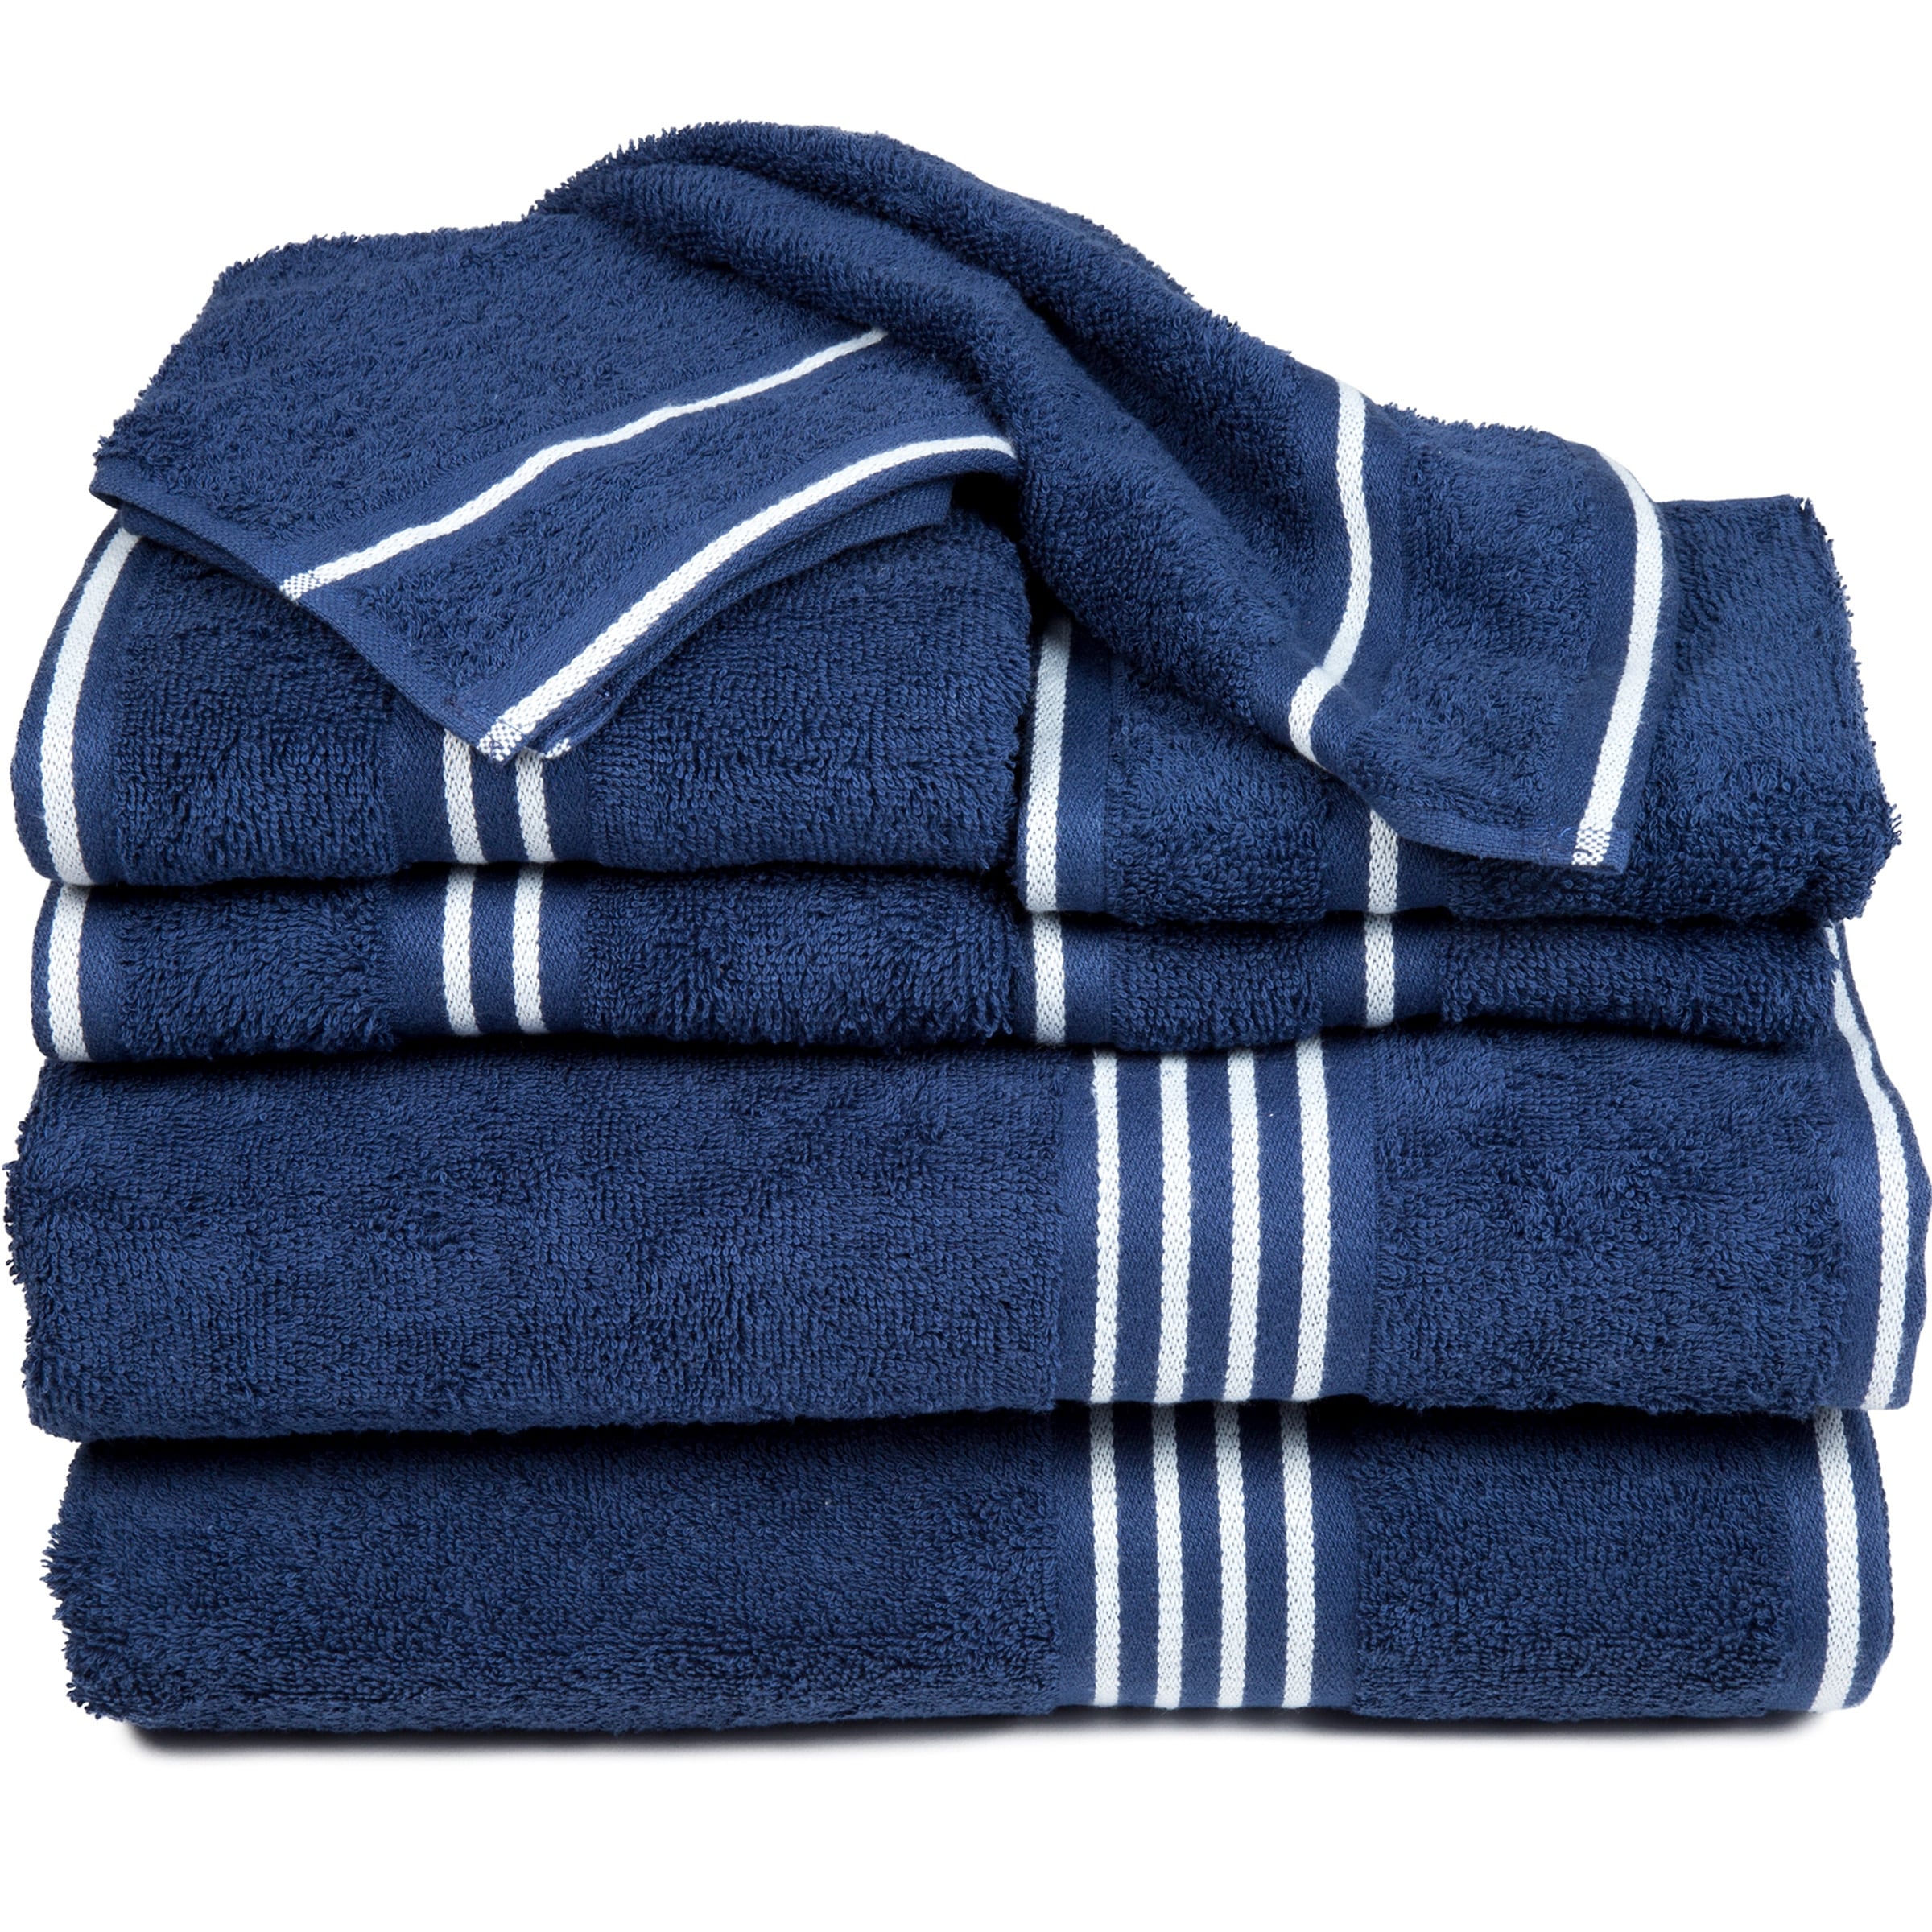 Towel Set - Cotton Bathroom Accessories with Bath Towels, Hand